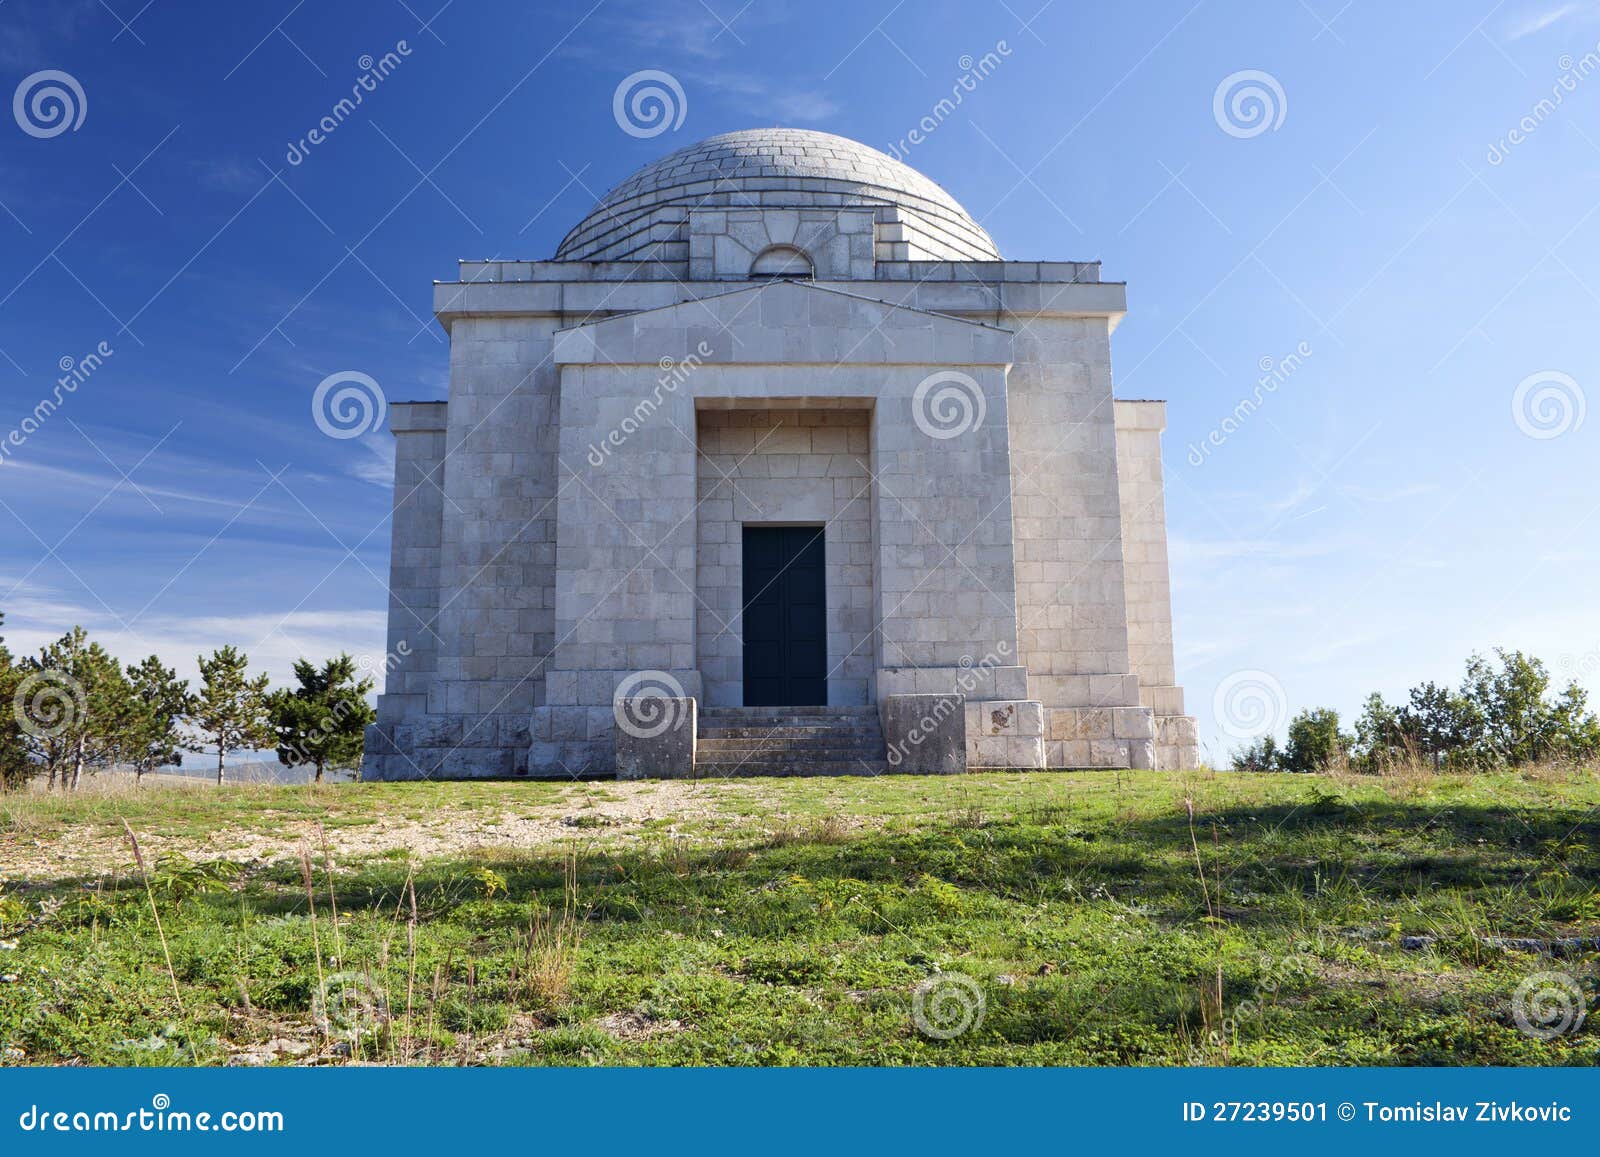 ivan mestrovic mausoleum in otavice